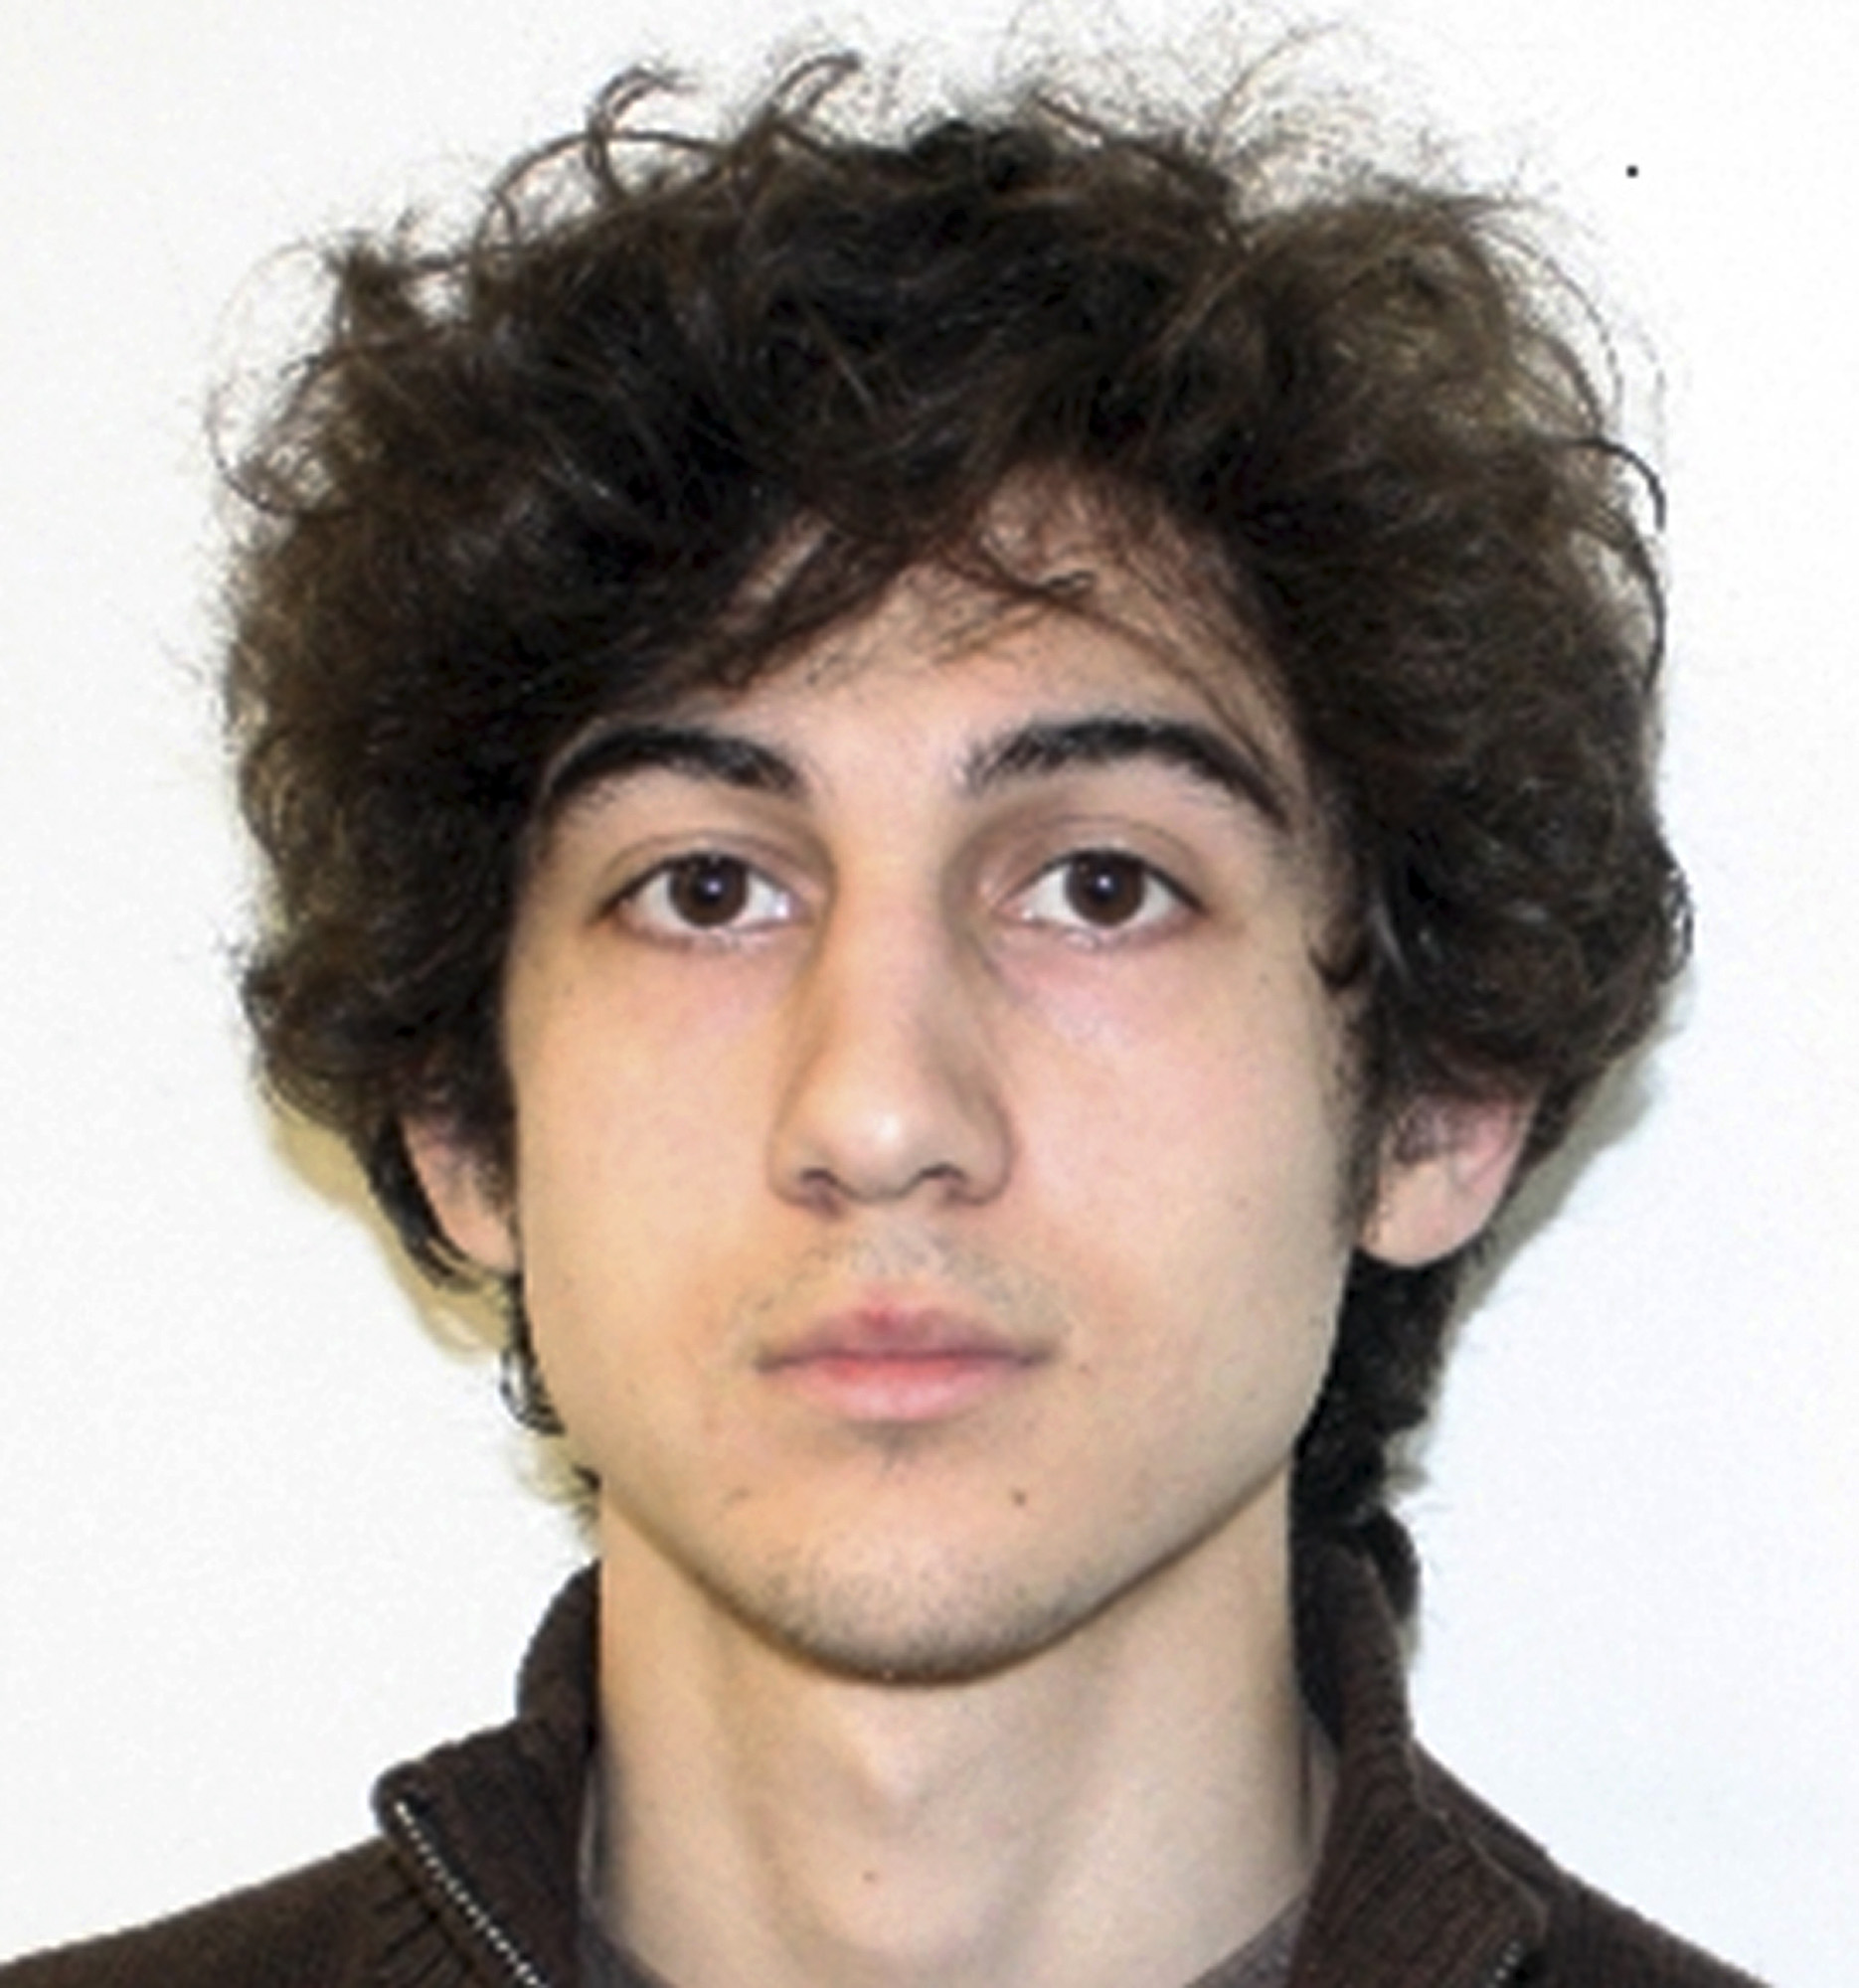 Boston Marathon bombing suspect Dzhokhar Tsarnaev is pictured in this undated FBI handout photo. (AP)